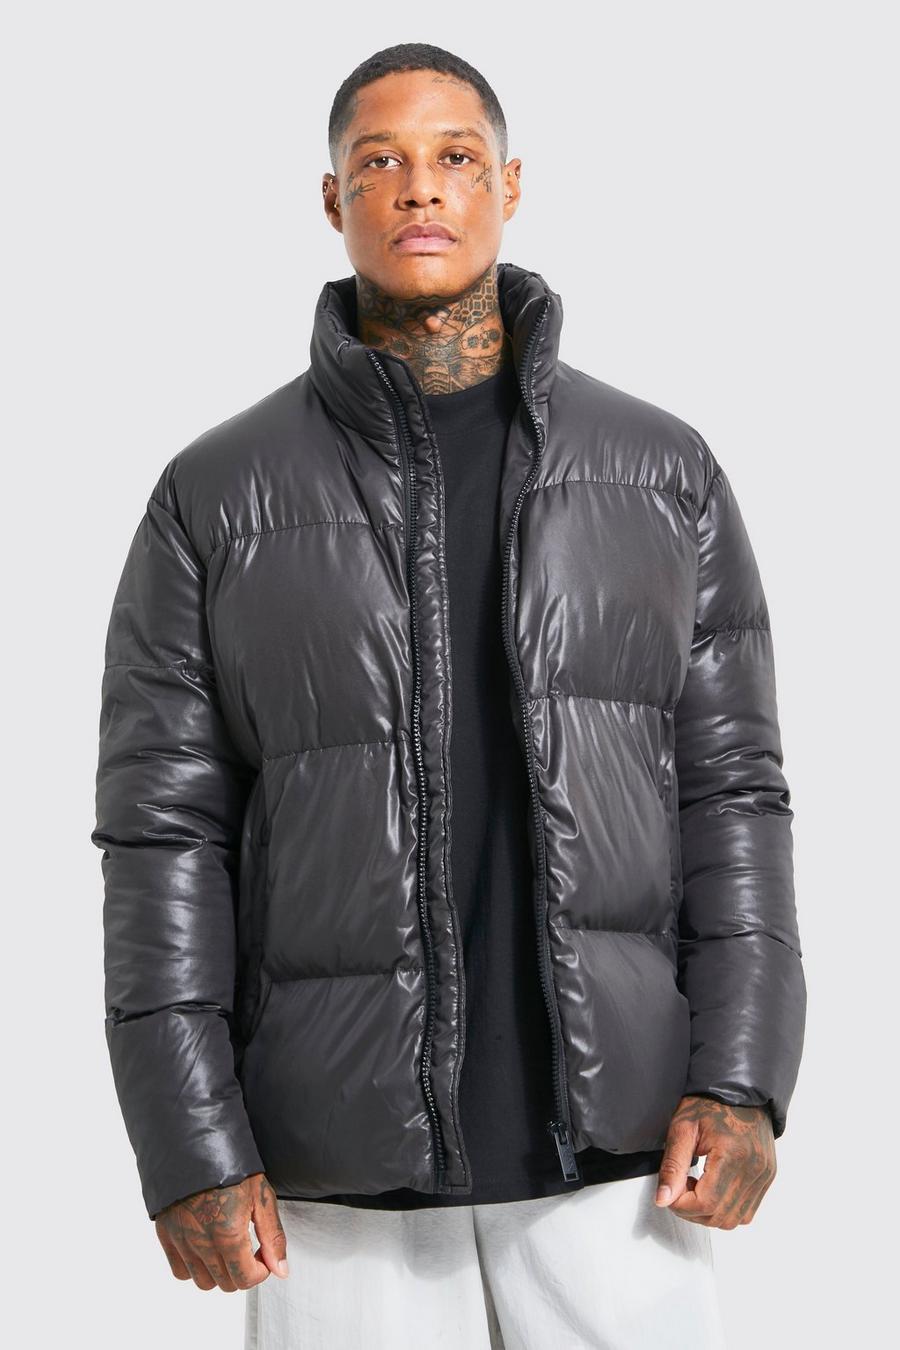 Oversized Fit Puffer Jacket - Black - Men